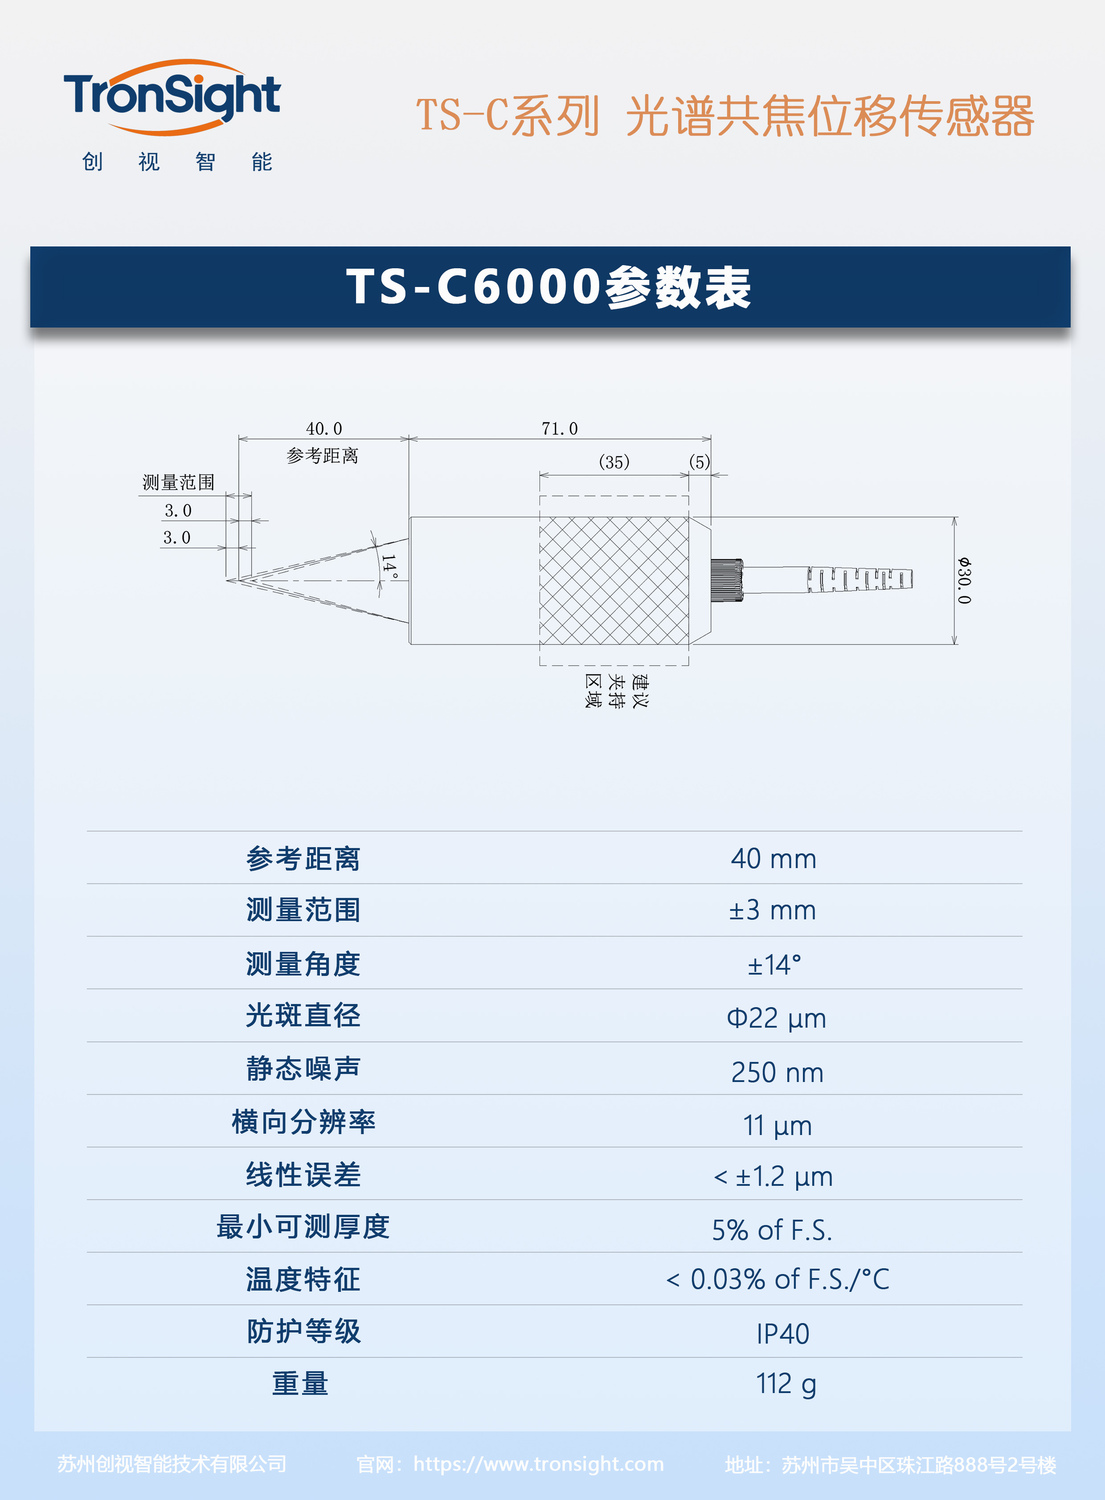 TS-C6000.jpg